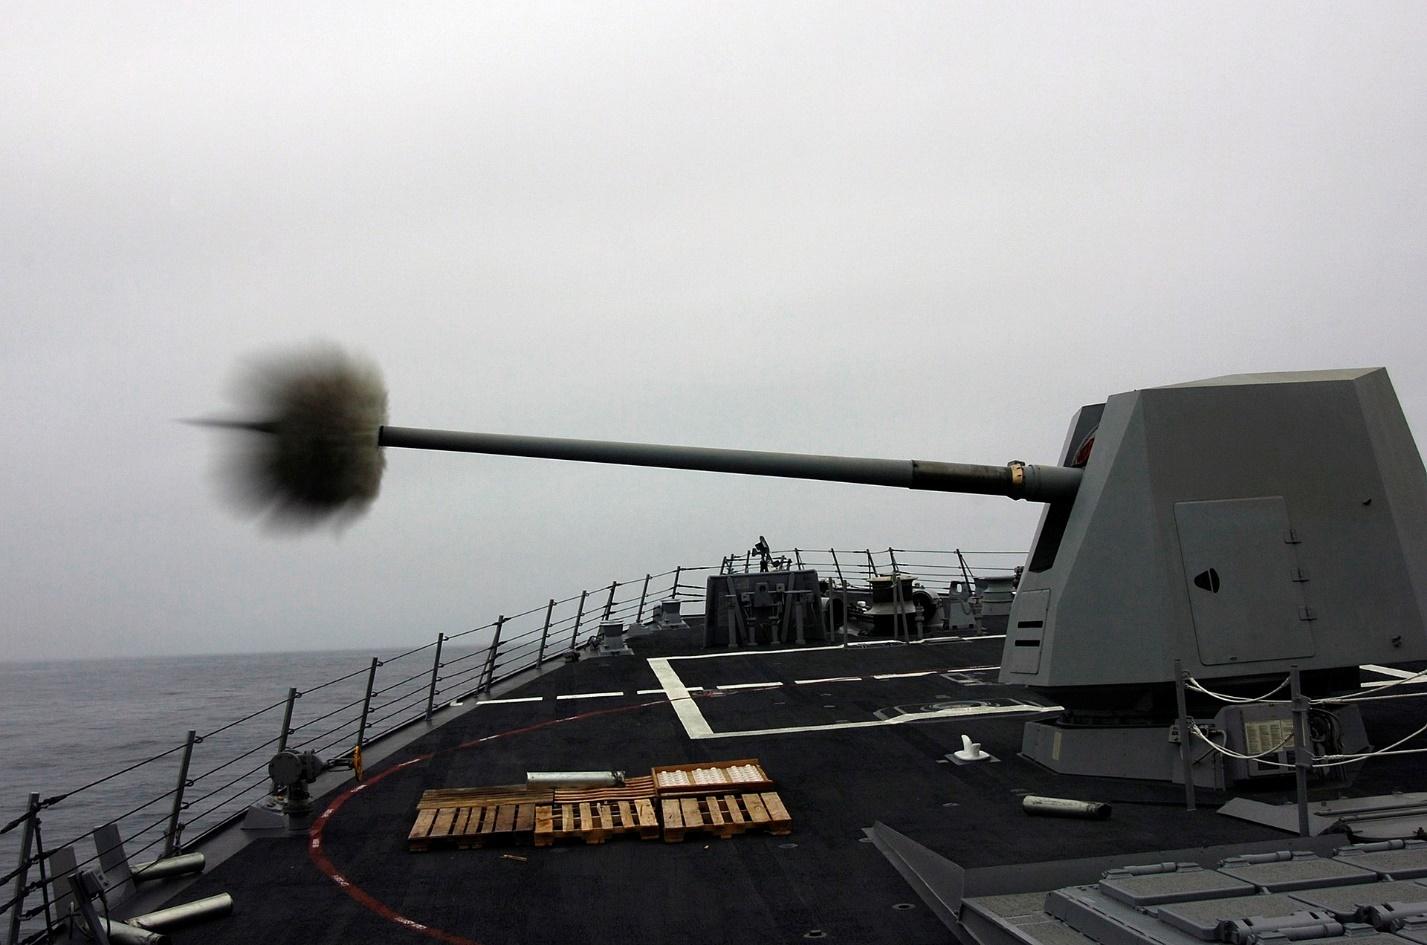 mk45 mod 4舰炮可能是美国海军最年长的武器系统,基型在1971年就服役